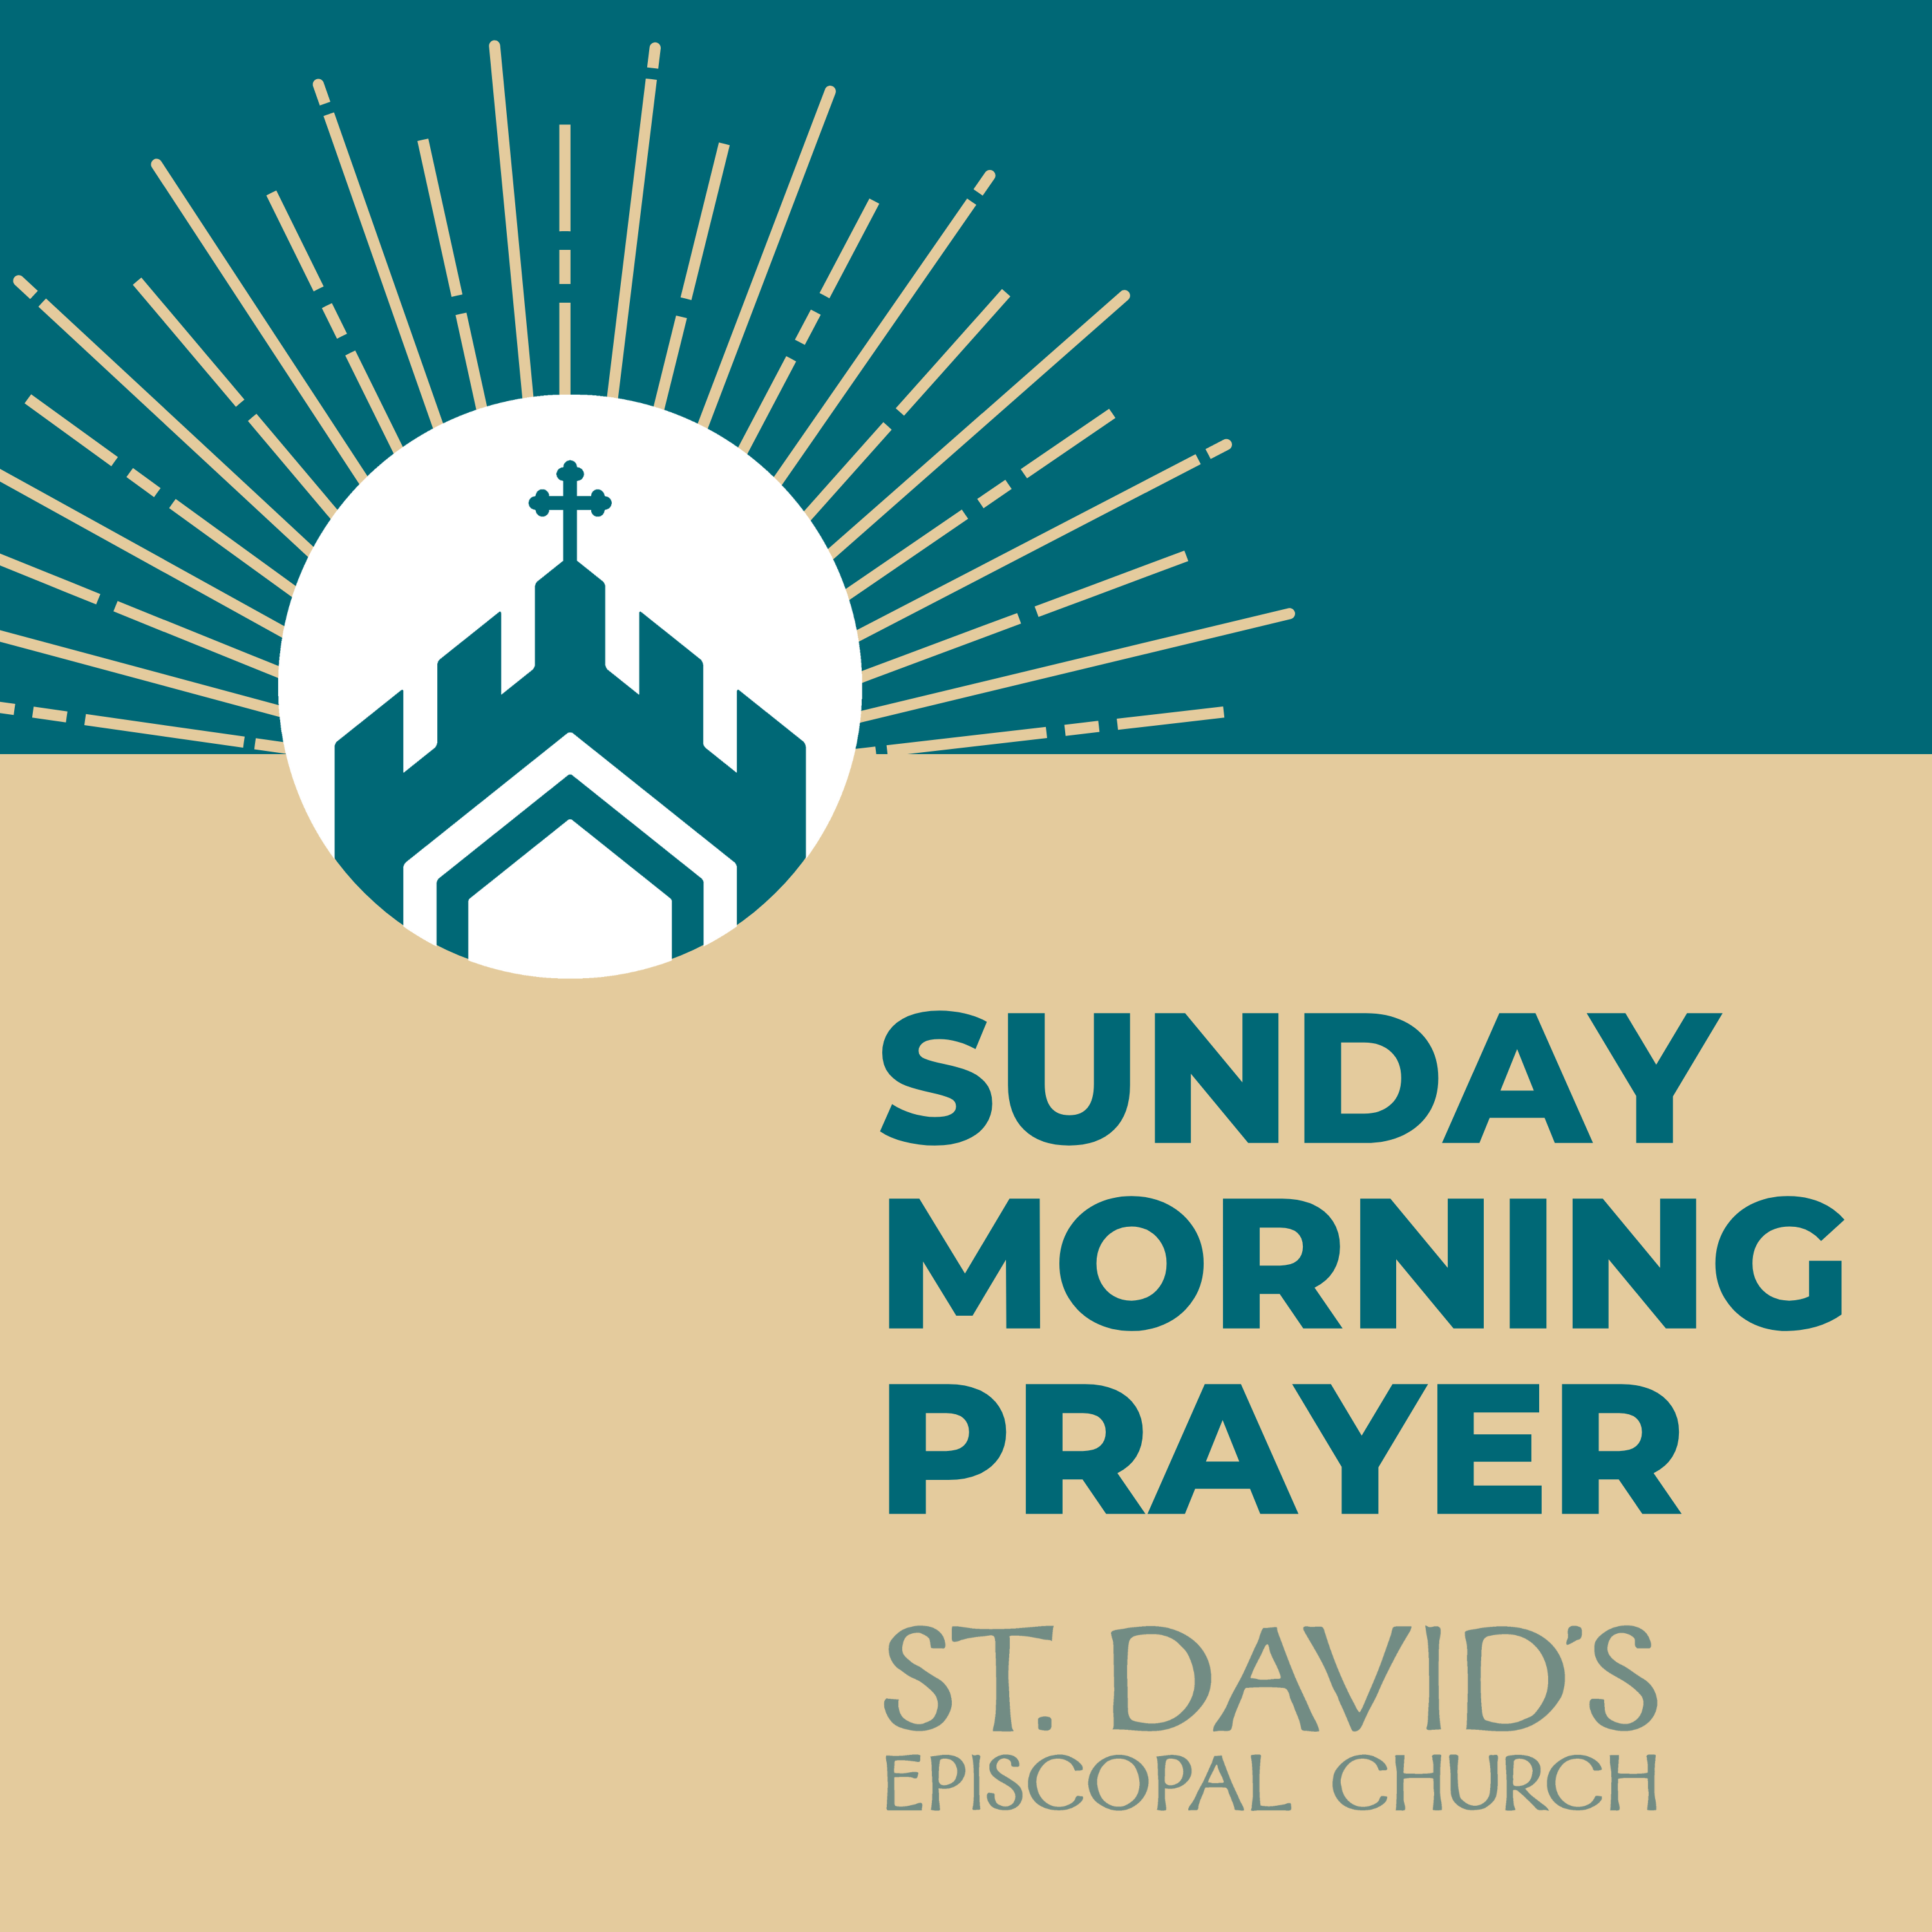 Sunday Morning Prayer: Rite Two, Year 2, 9th Sunday after Pentecost